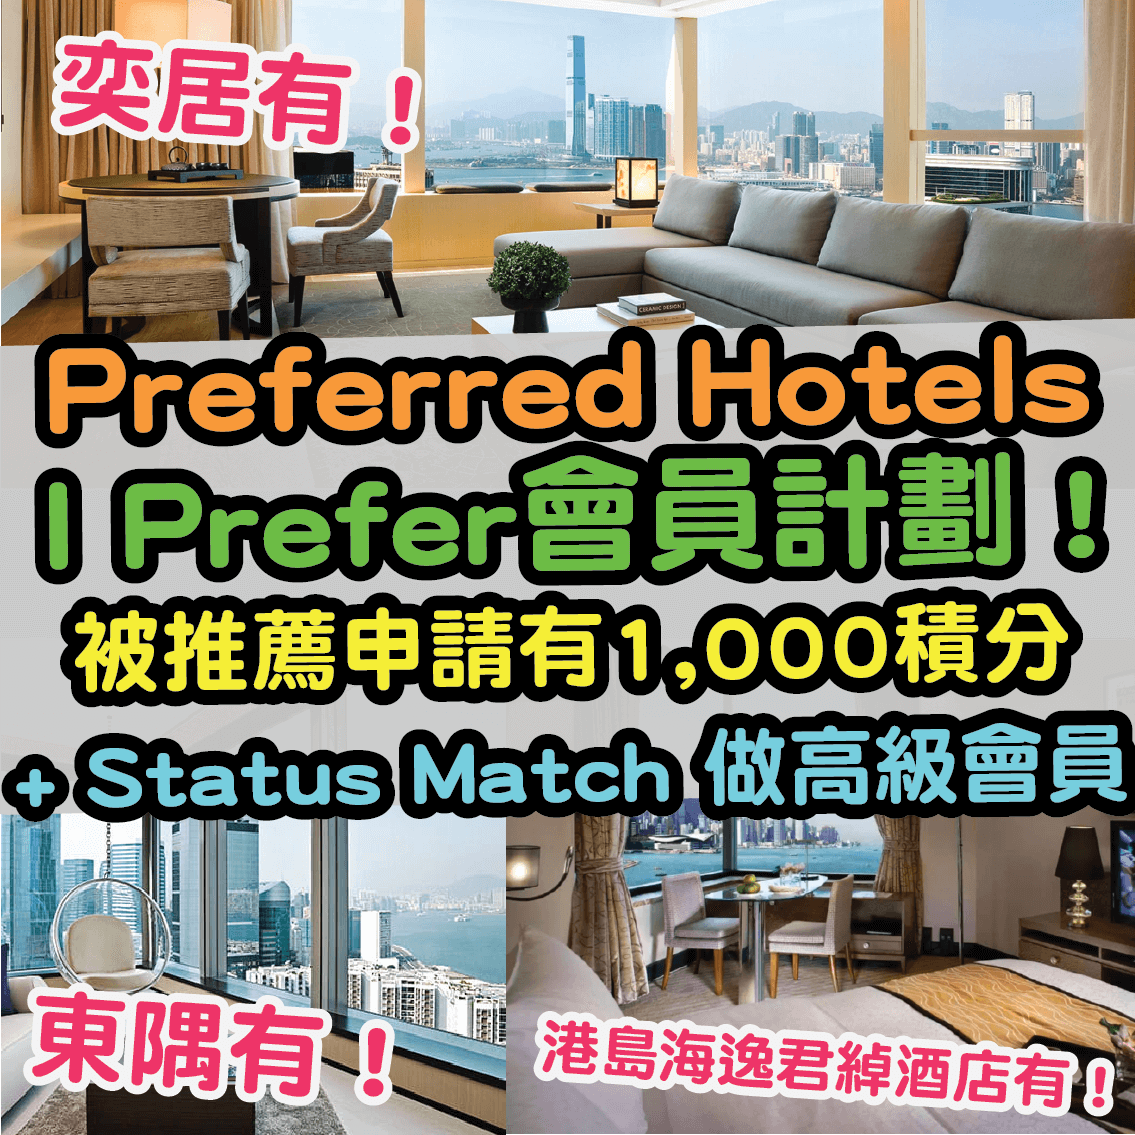 【Preferred Hotels I Prefer會員計劃❗❗】被推薦申請有1,000積分 + Status Match 做高級會員！奕居 Upper House、東隅 The East及港島海逸君綽酒店都用到！